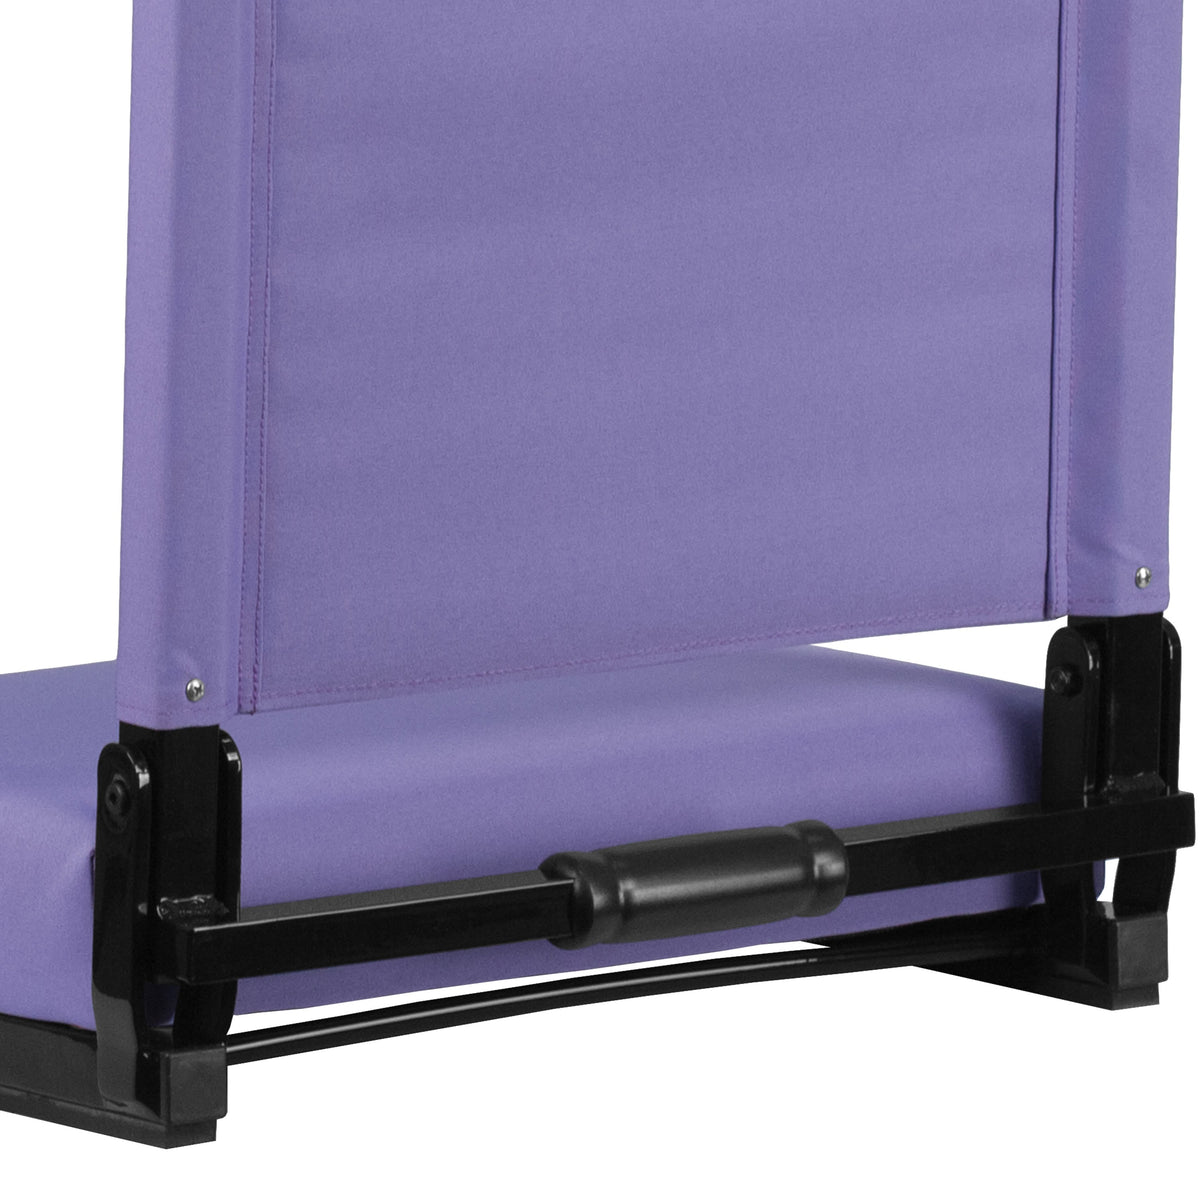 Purple |#| 500 lb. Rated Lightweight Stadium Chair-Handle-Padded Seat, Purple